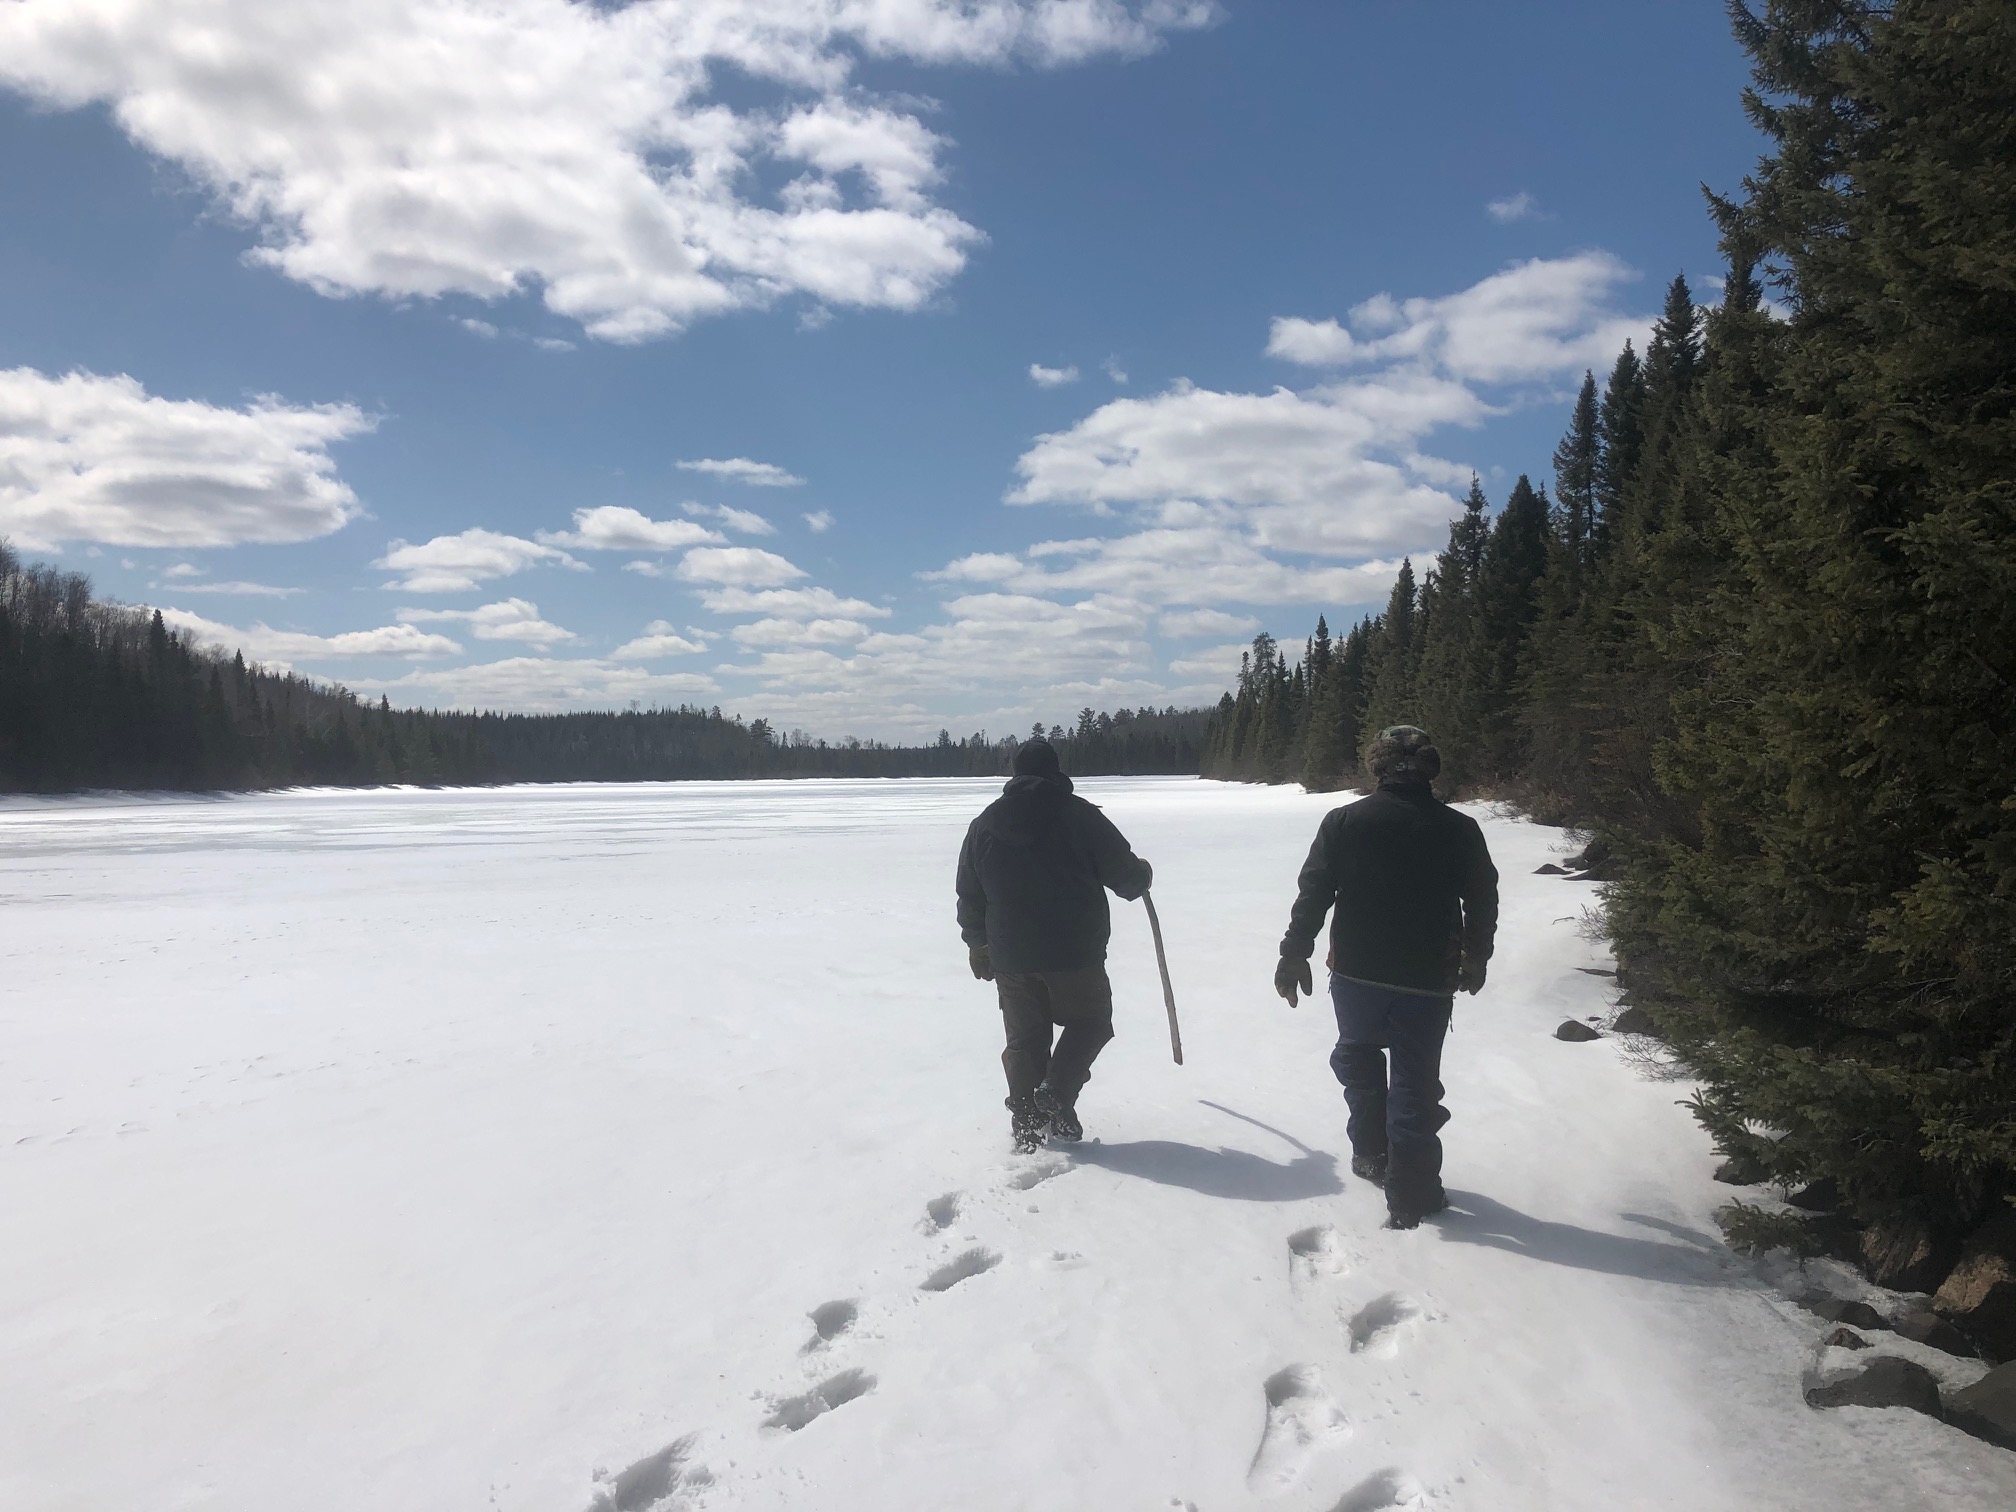 Walking around Rudy Lake in winter